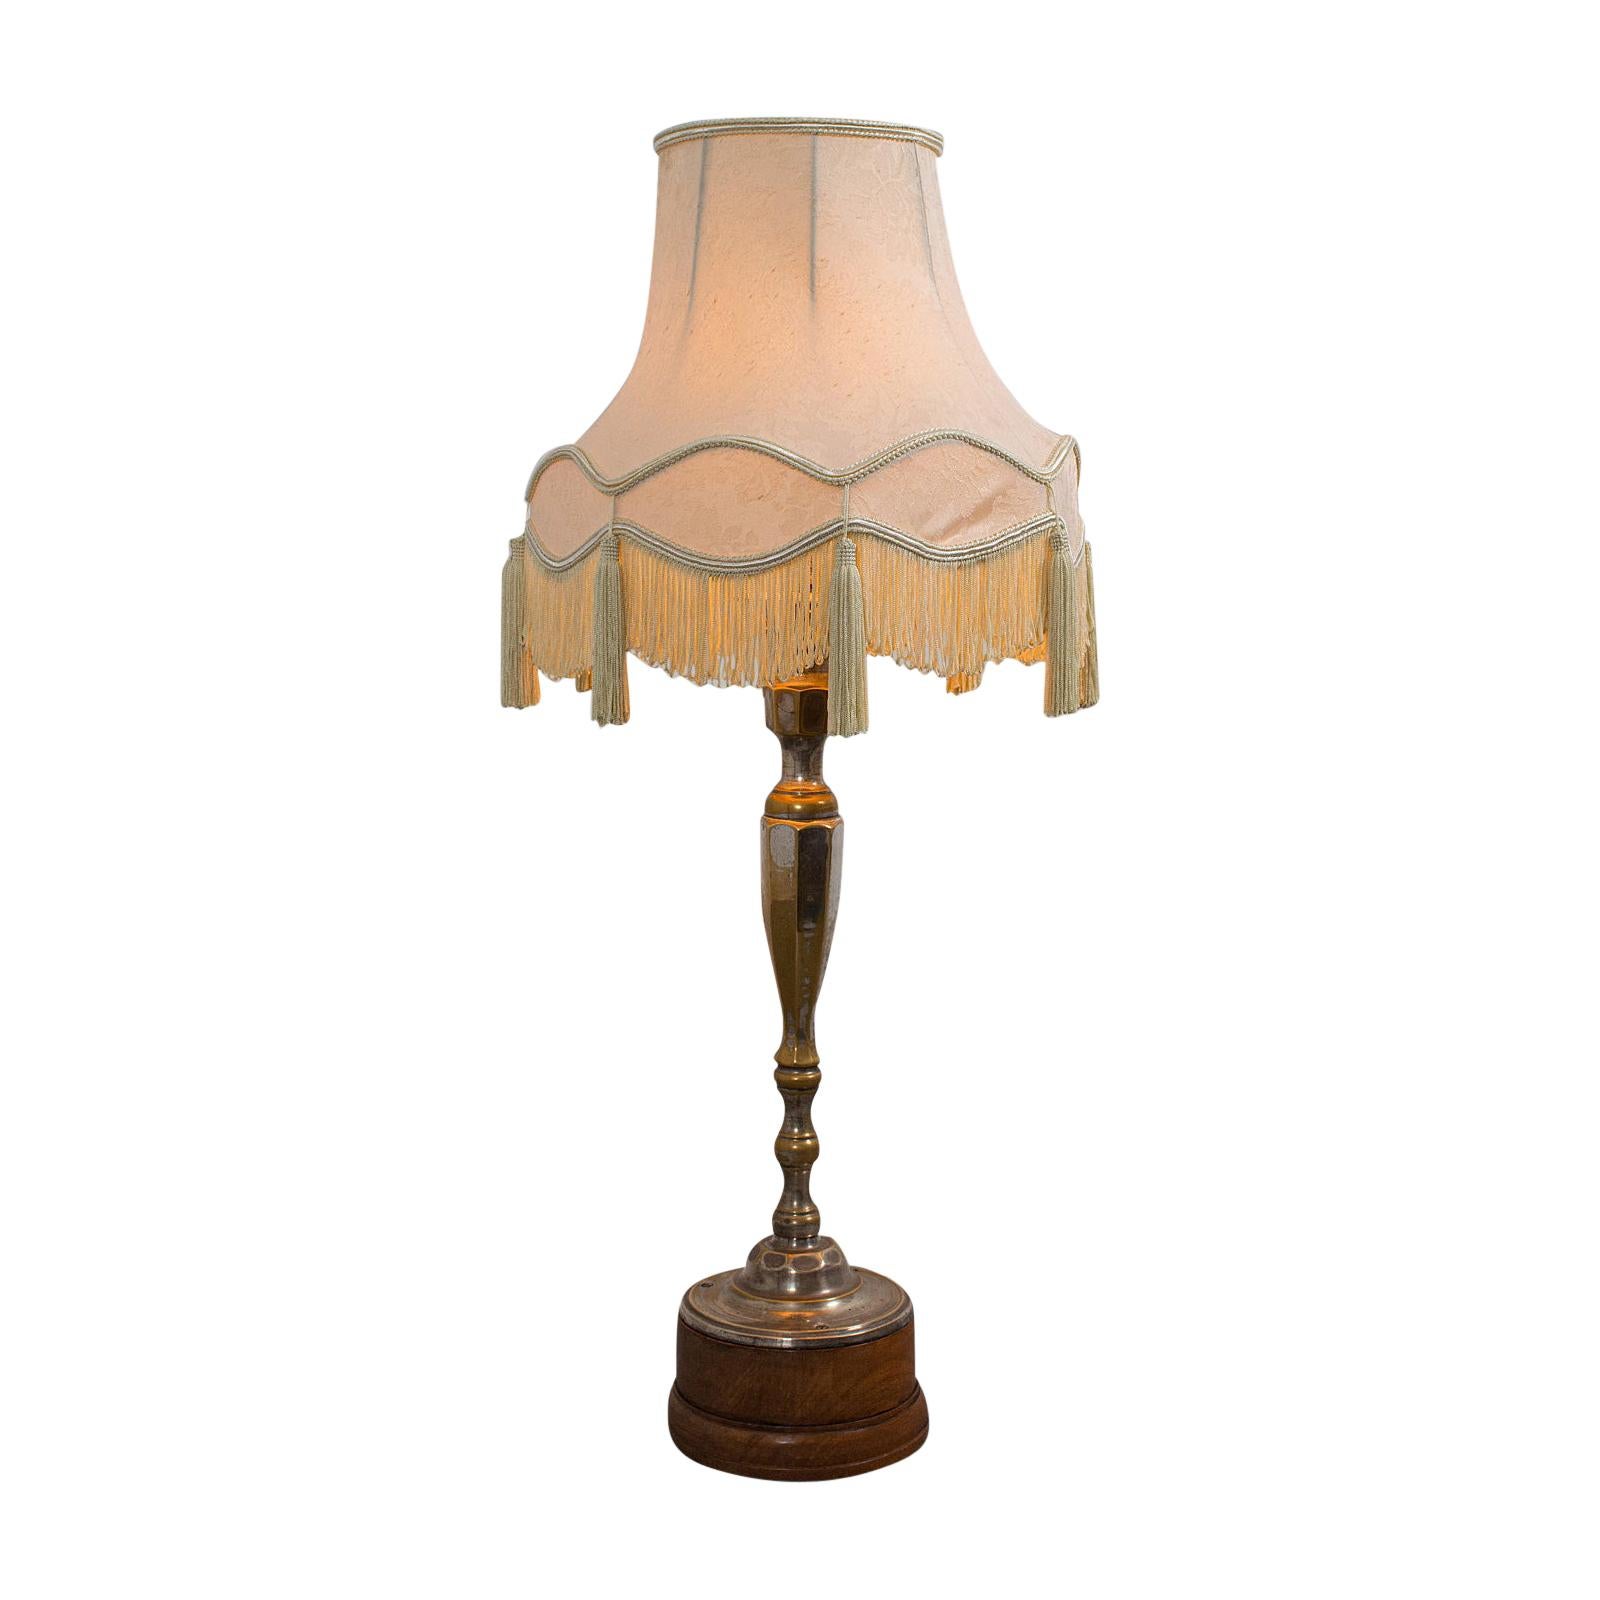 Tall Vintage Table Lamp, English, Walnut, Silver Plate, Side Light, circa 1930